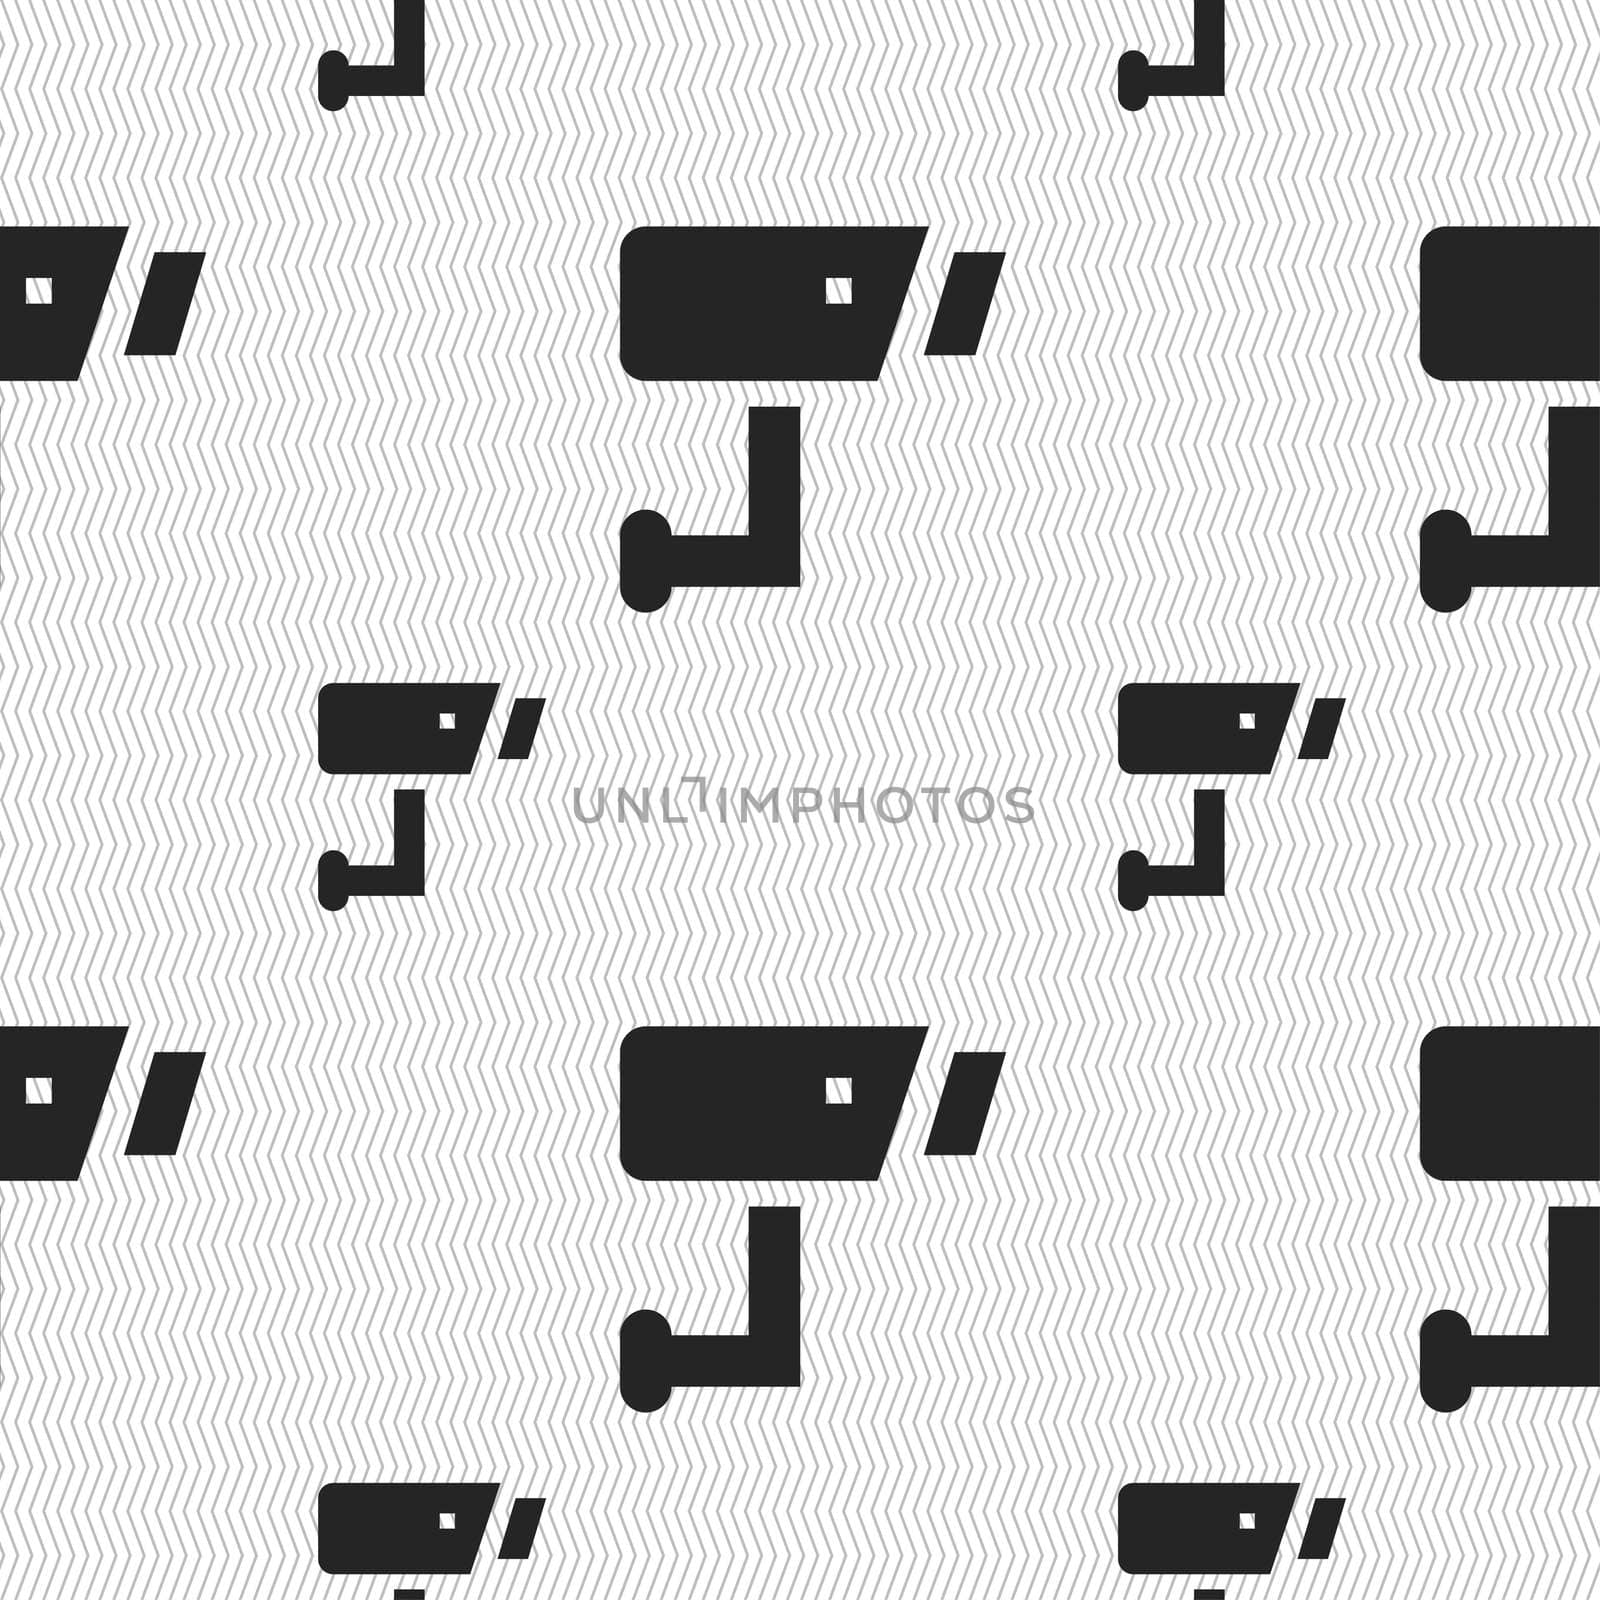 Surveillance Camera icon sign. Seamless pattern with geometric texture. illustration